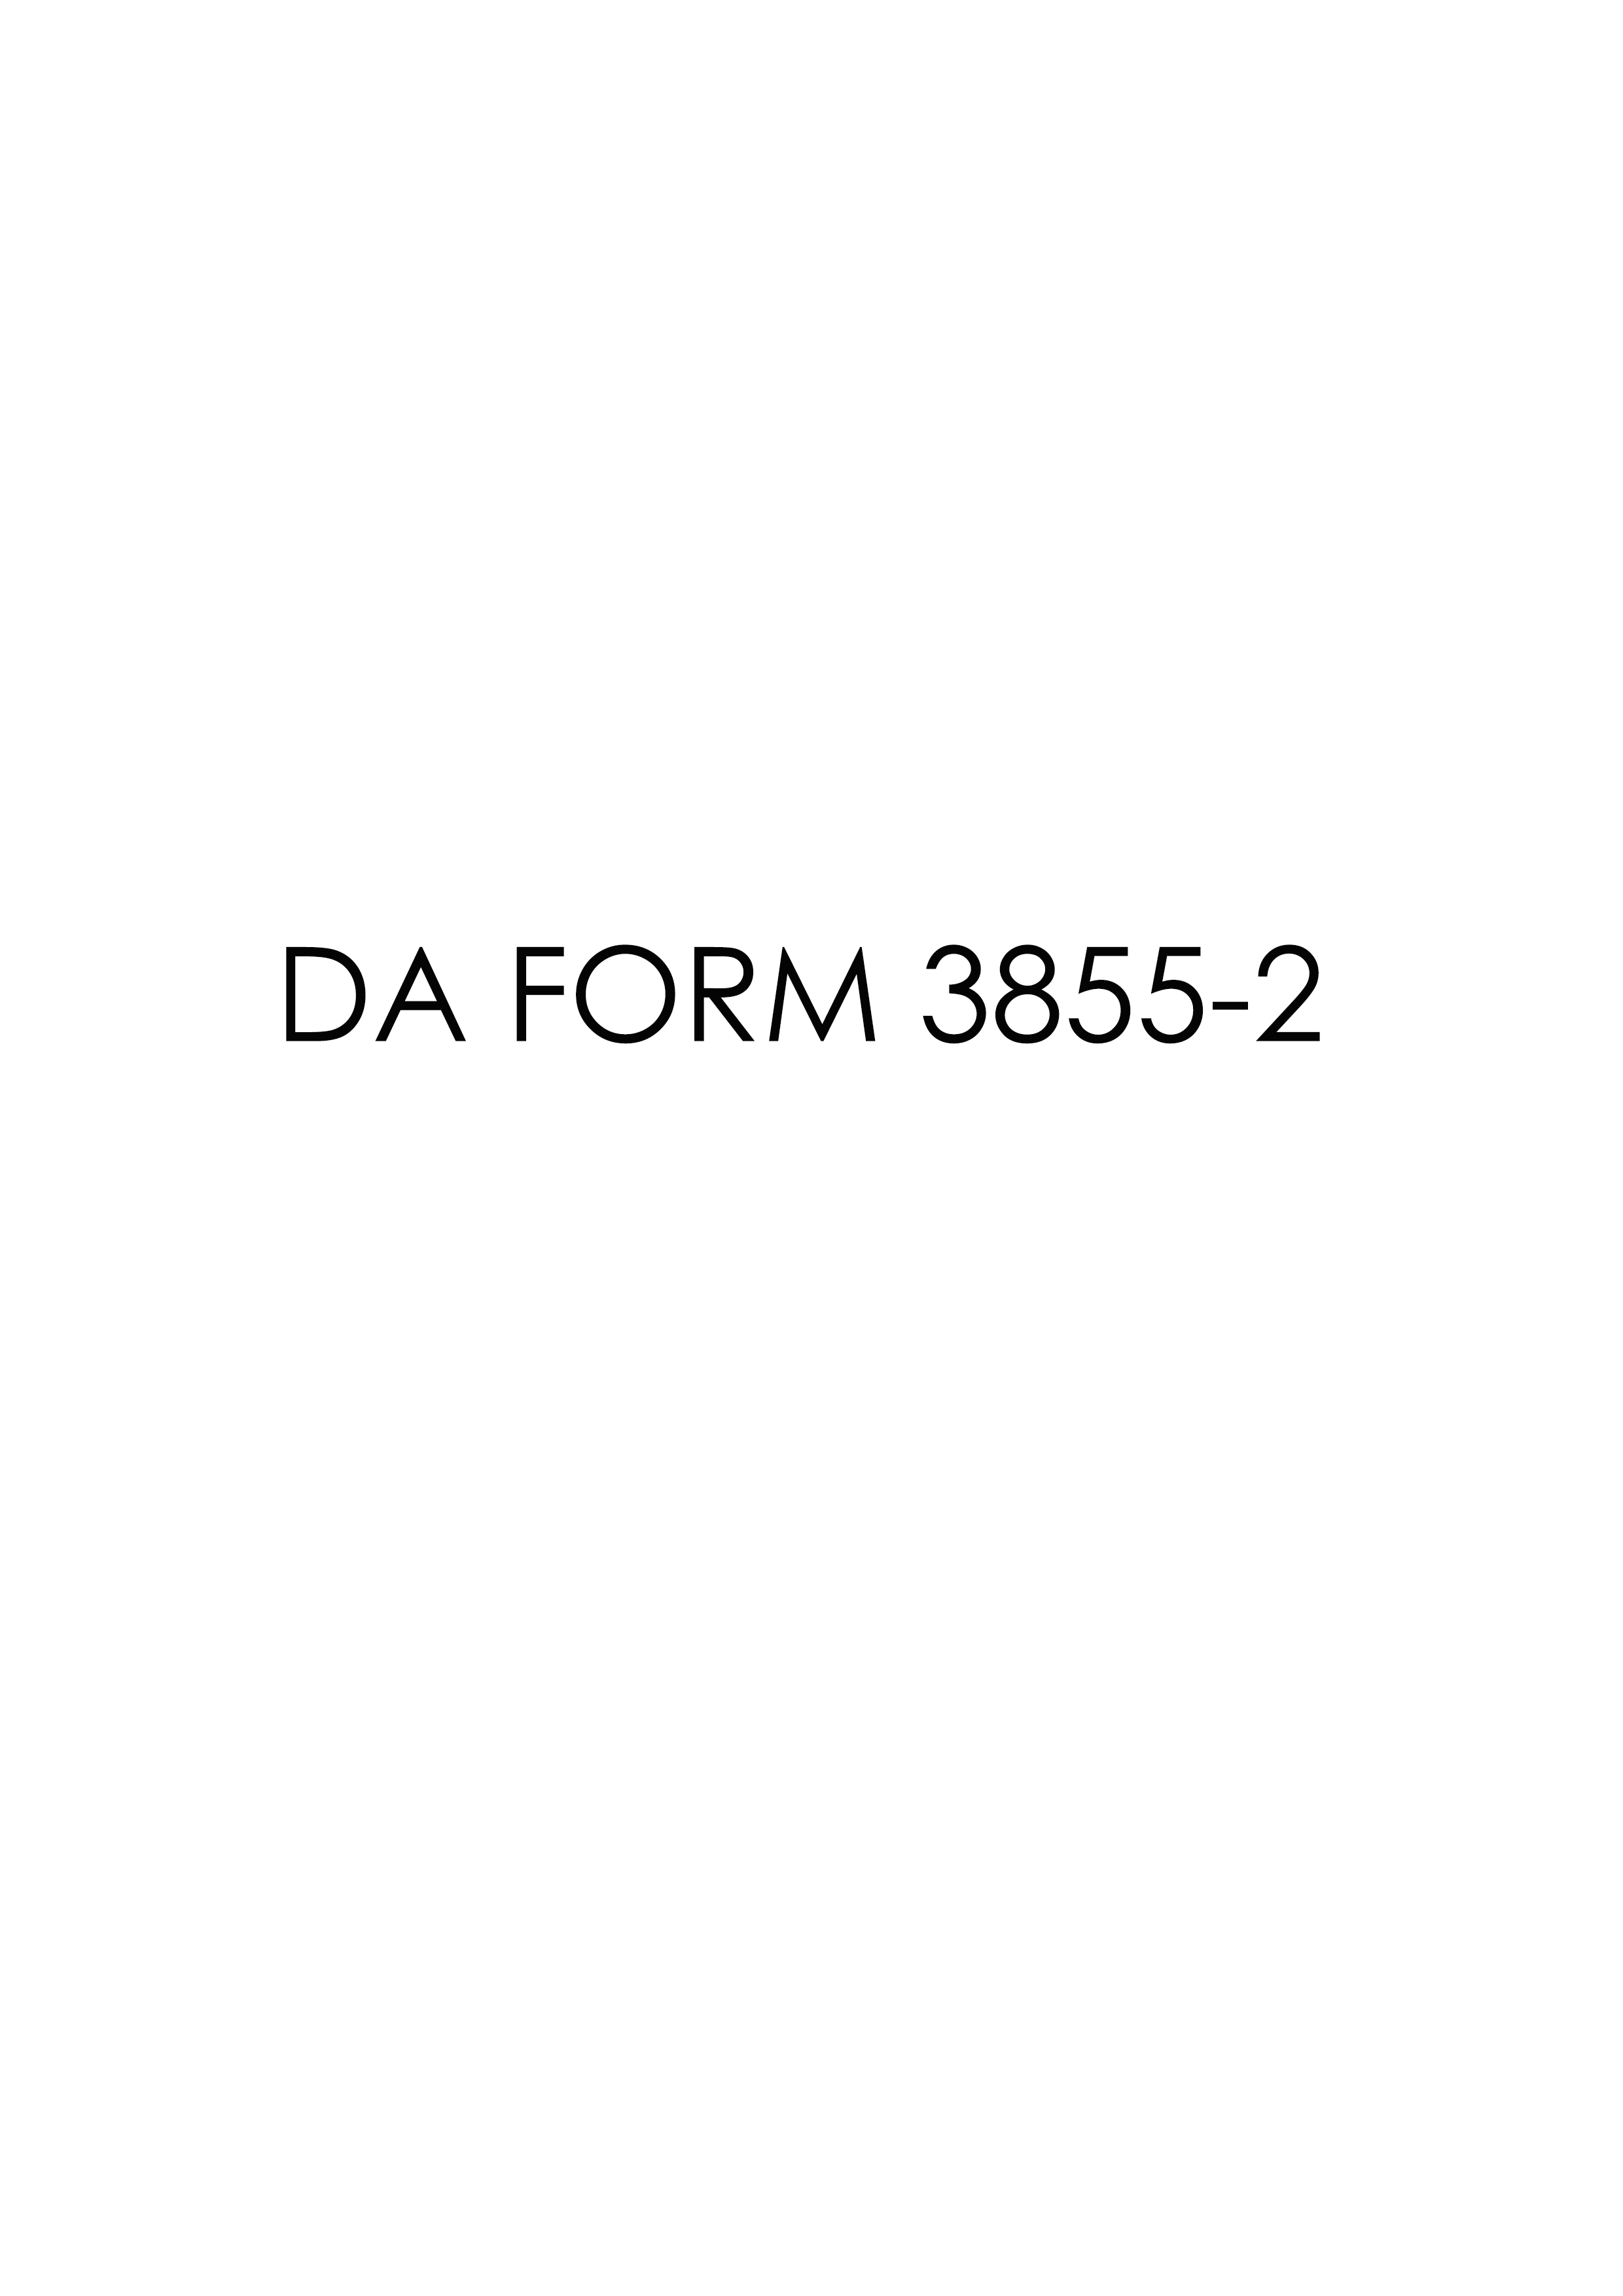 da Form 3855-2 fillable